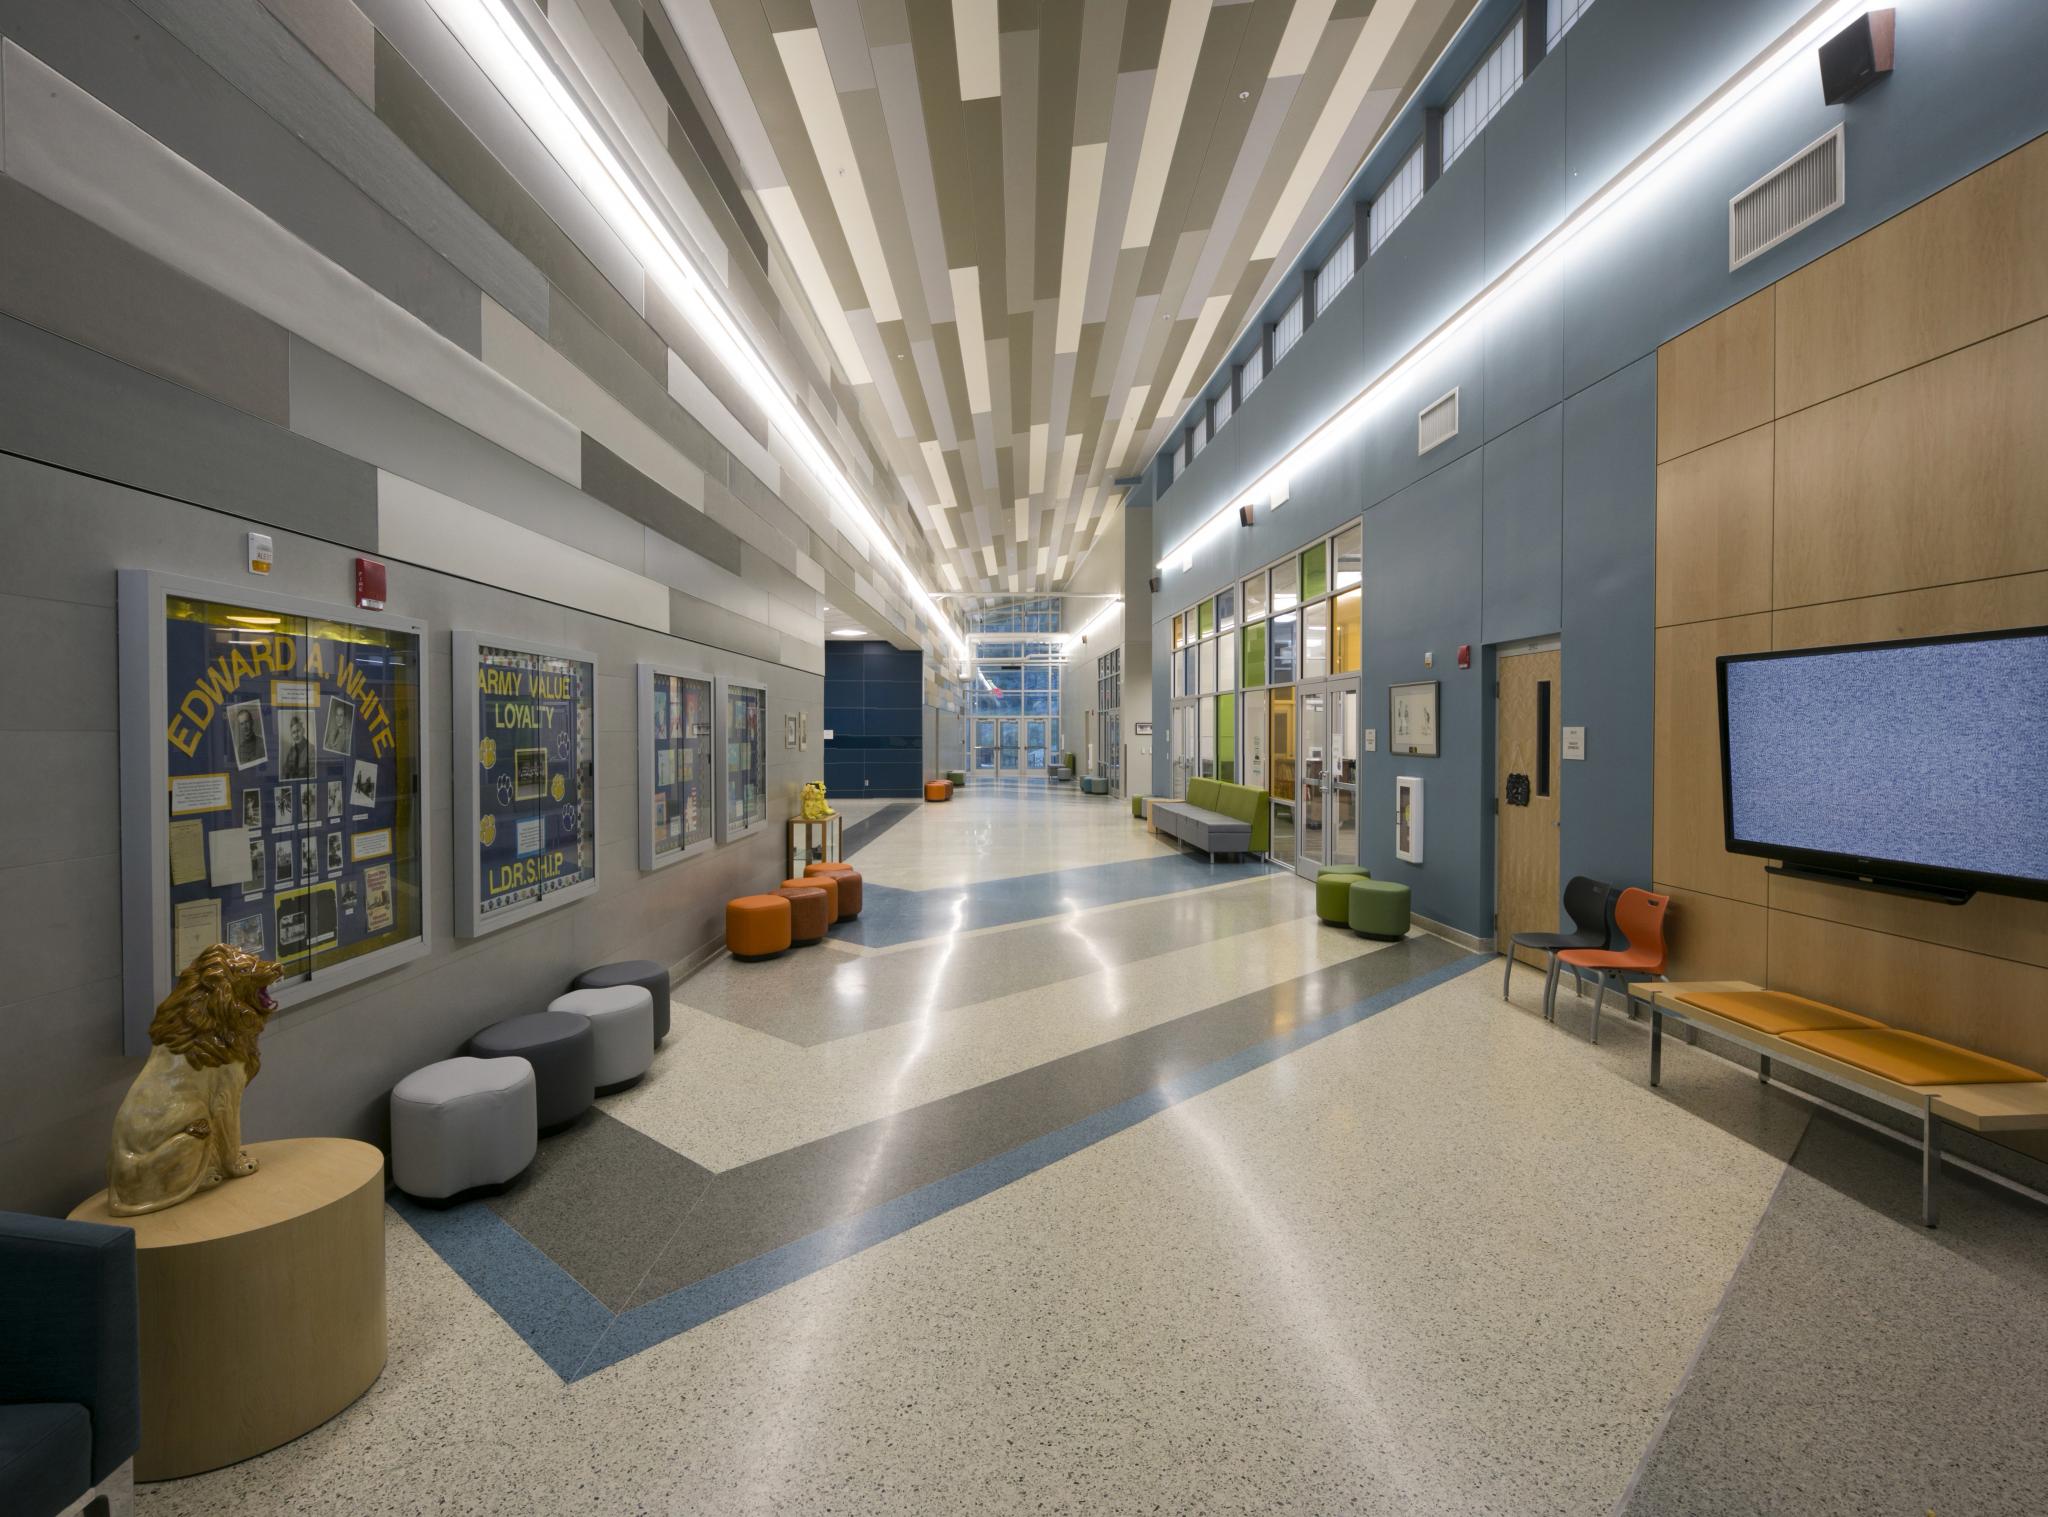 image of a hallway